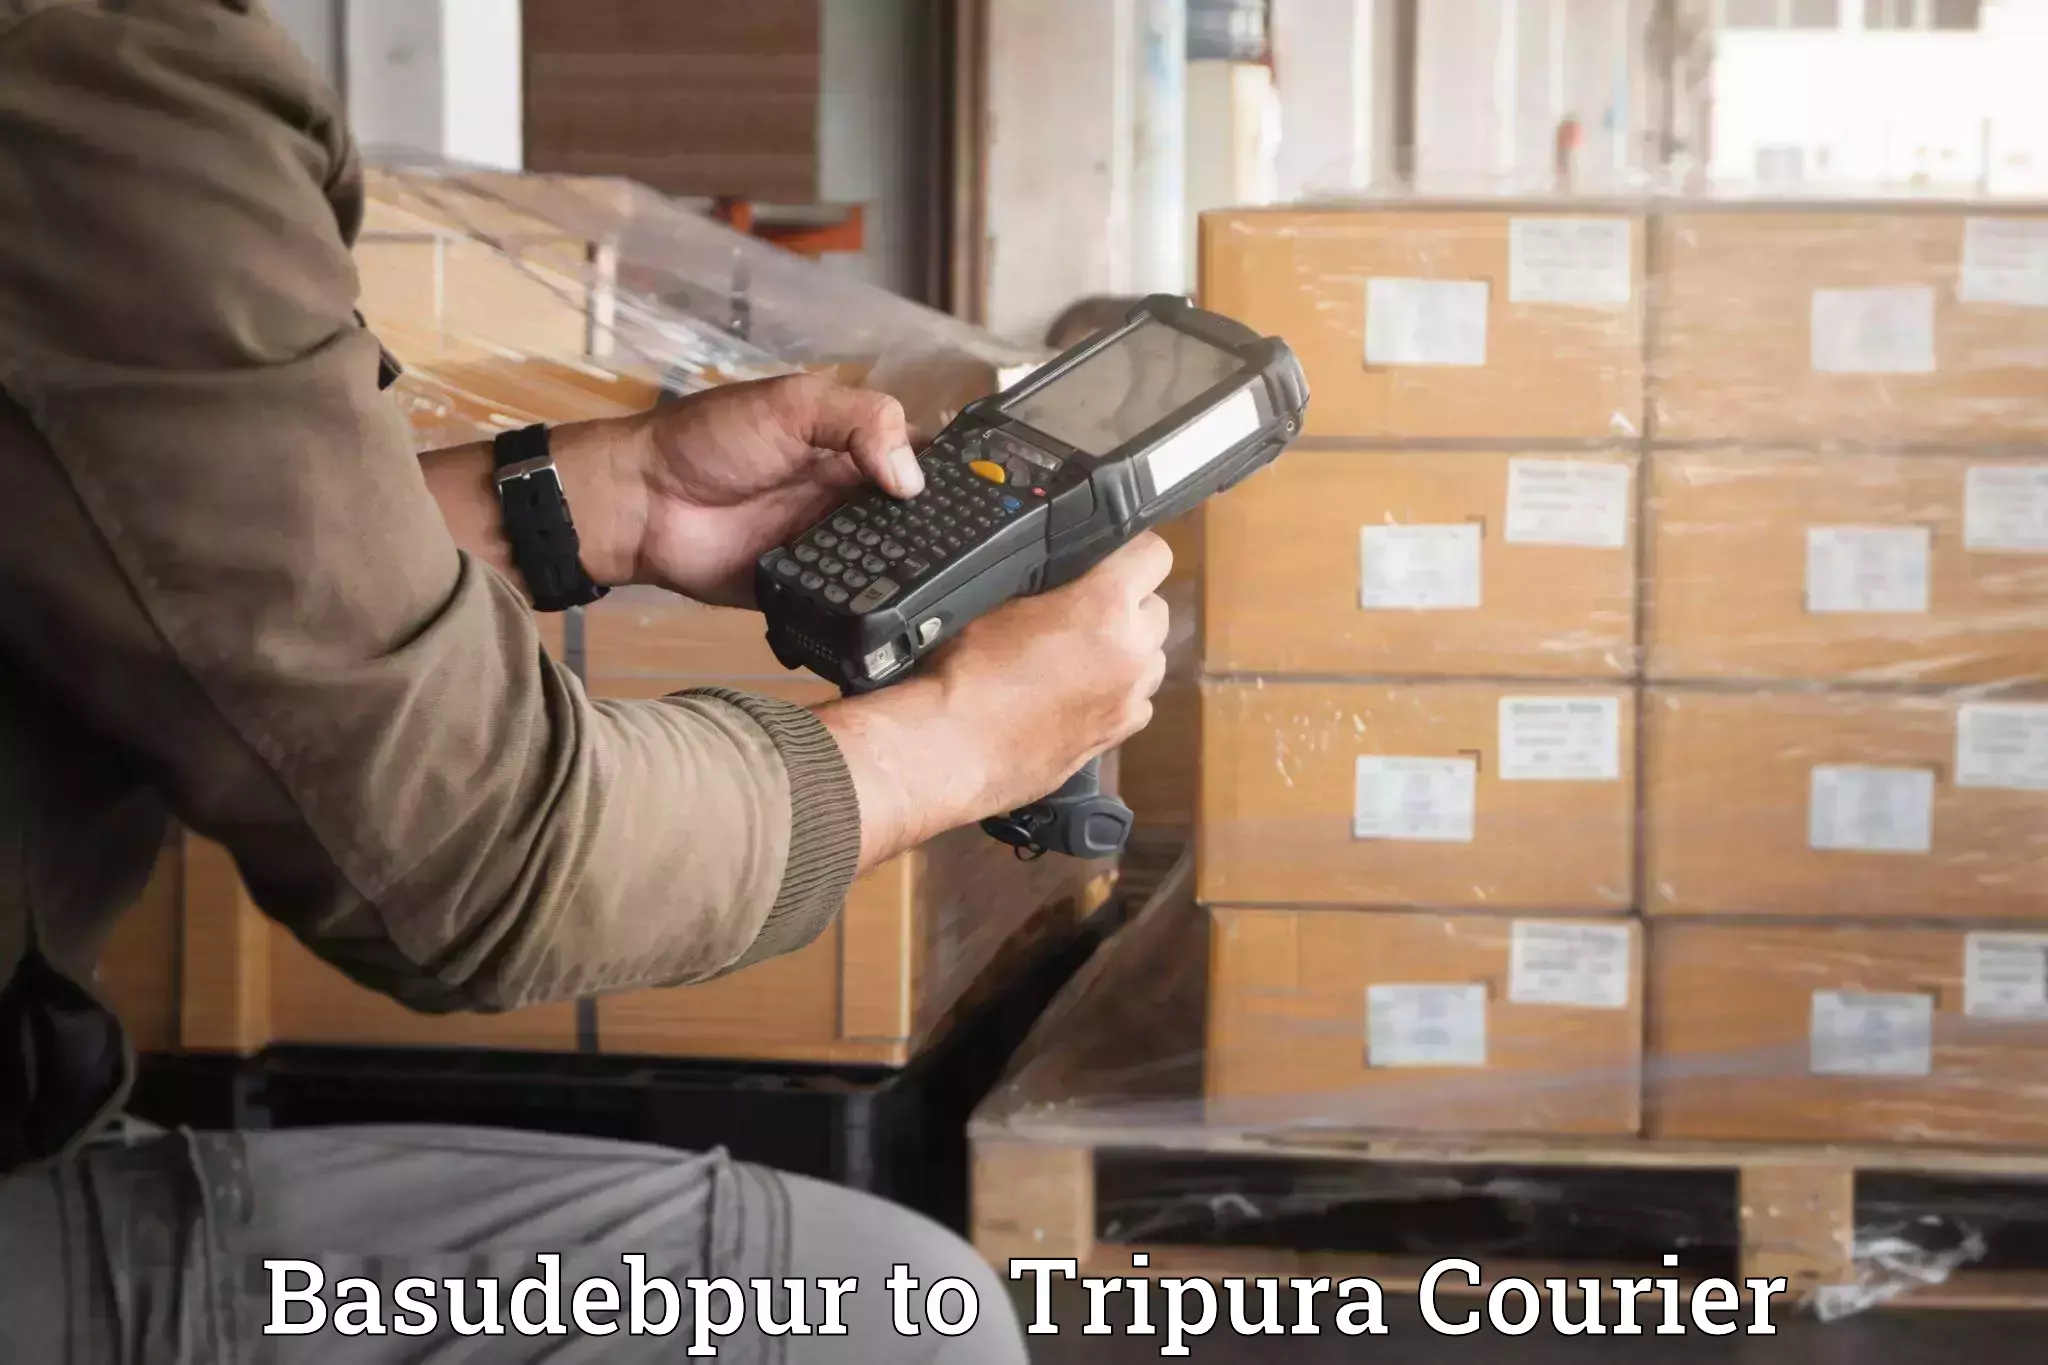 Stress-free moving Basudebpur to Tripura